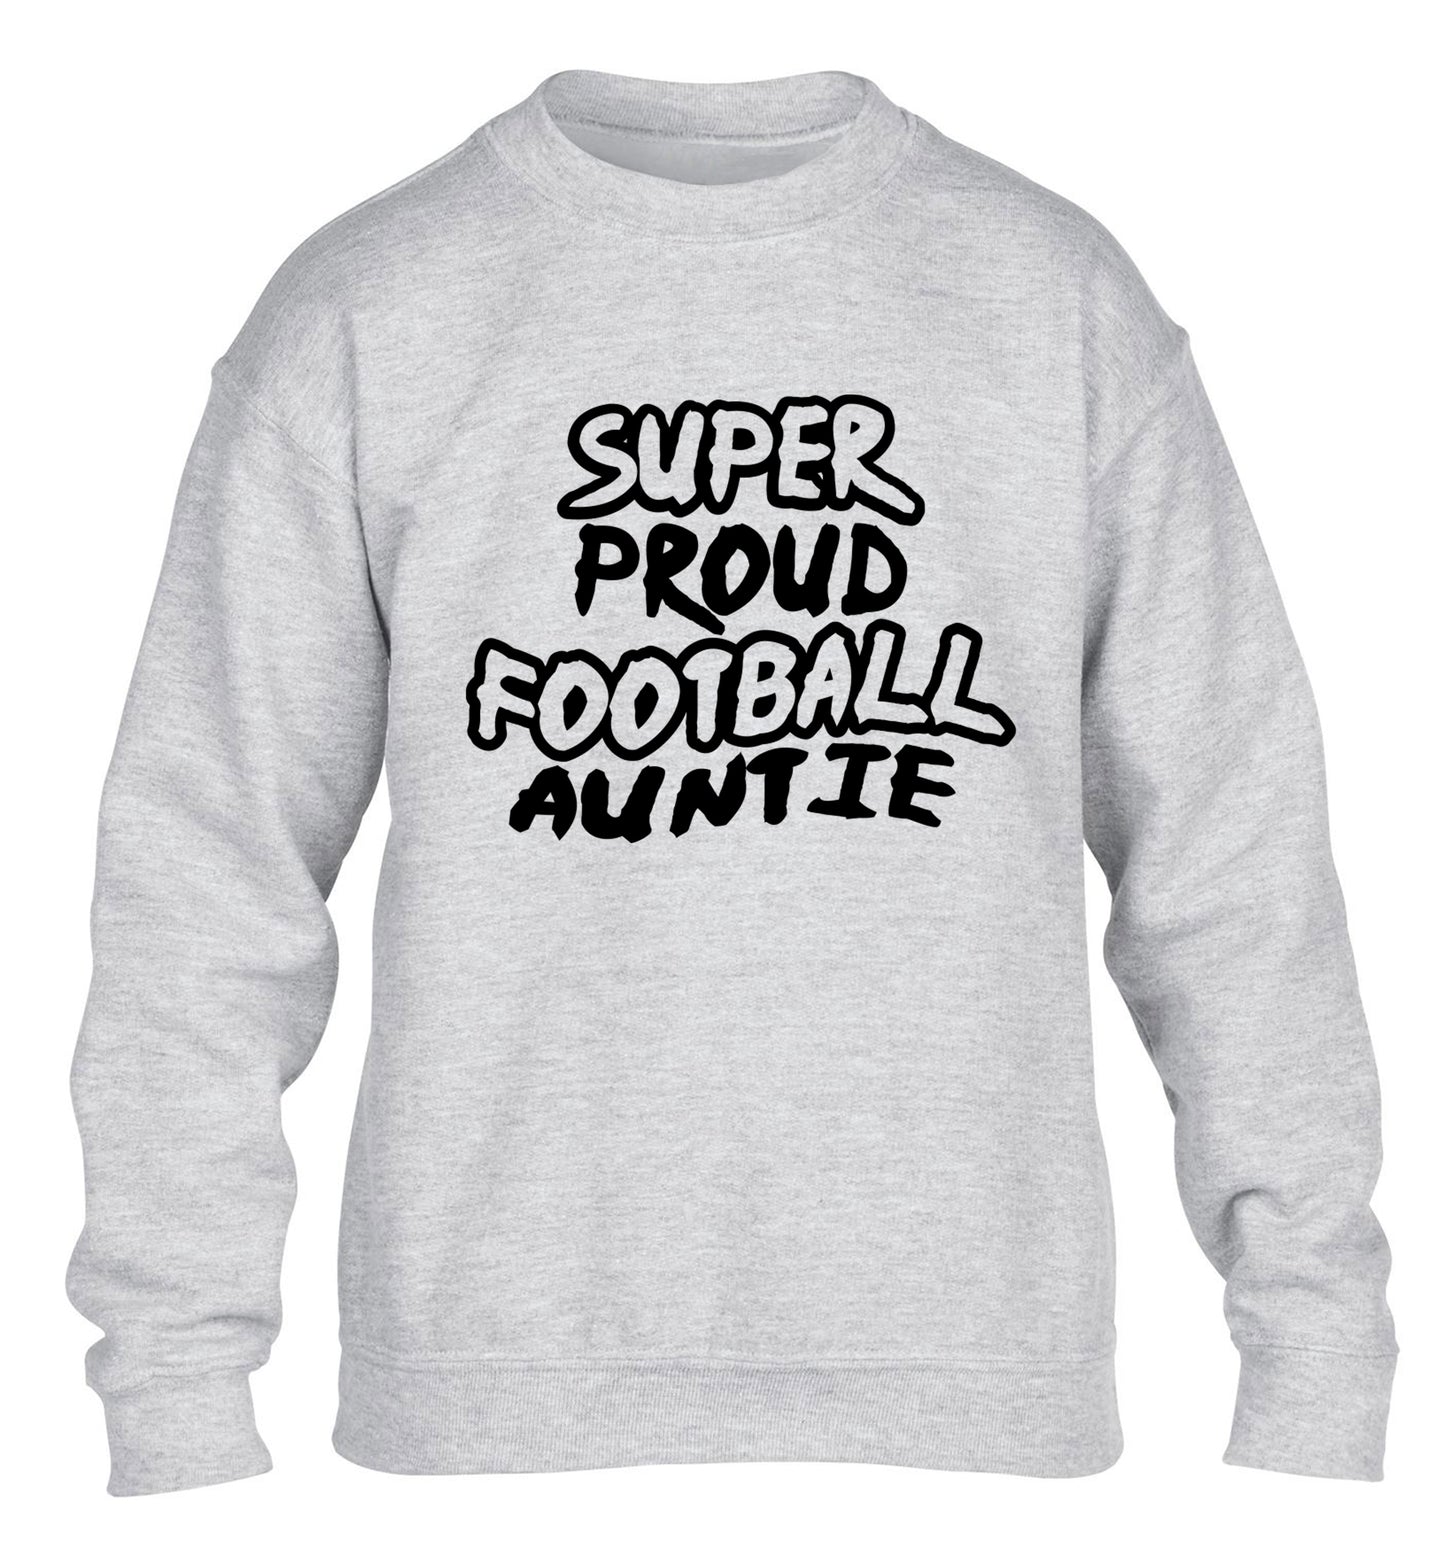 Super proud football auntie children's grey sweater 12-14 Years